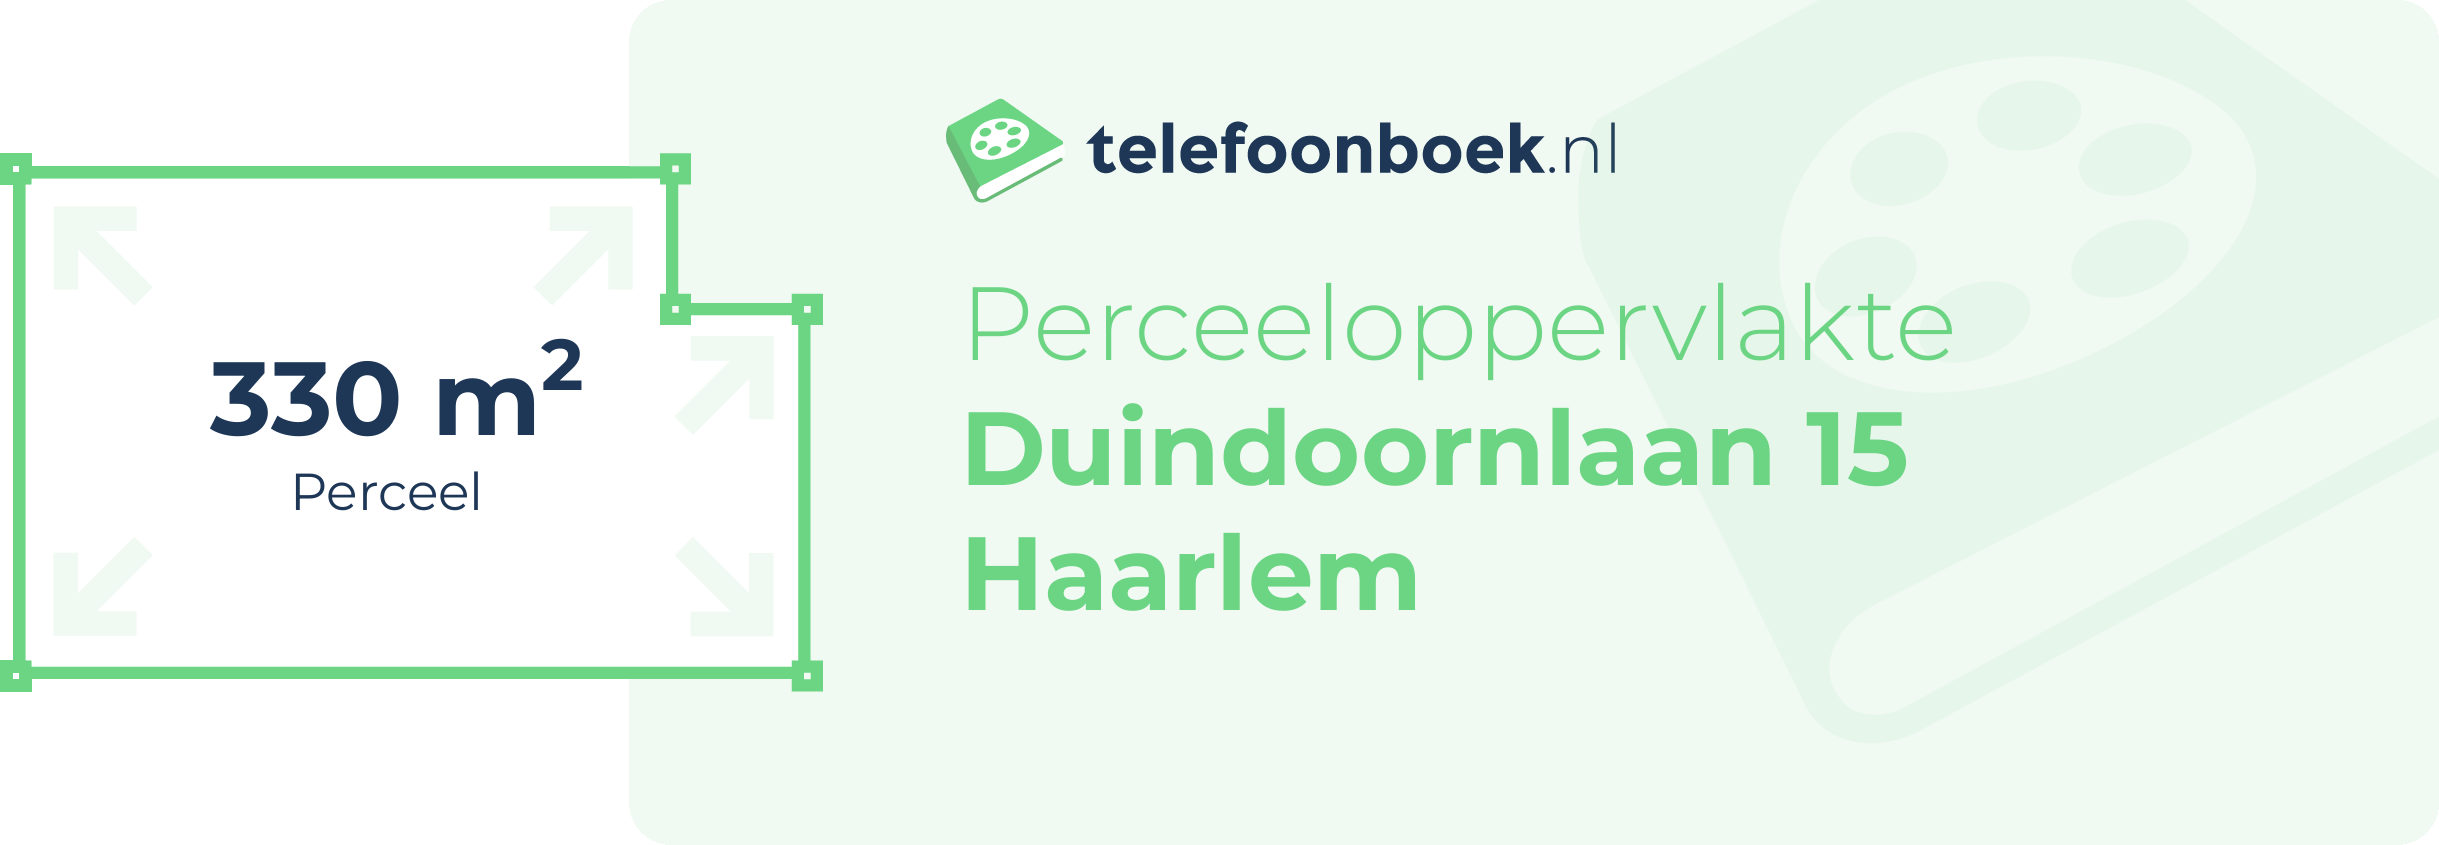 Perceeloppervlakte Duindoornlaan 15 Haarlem